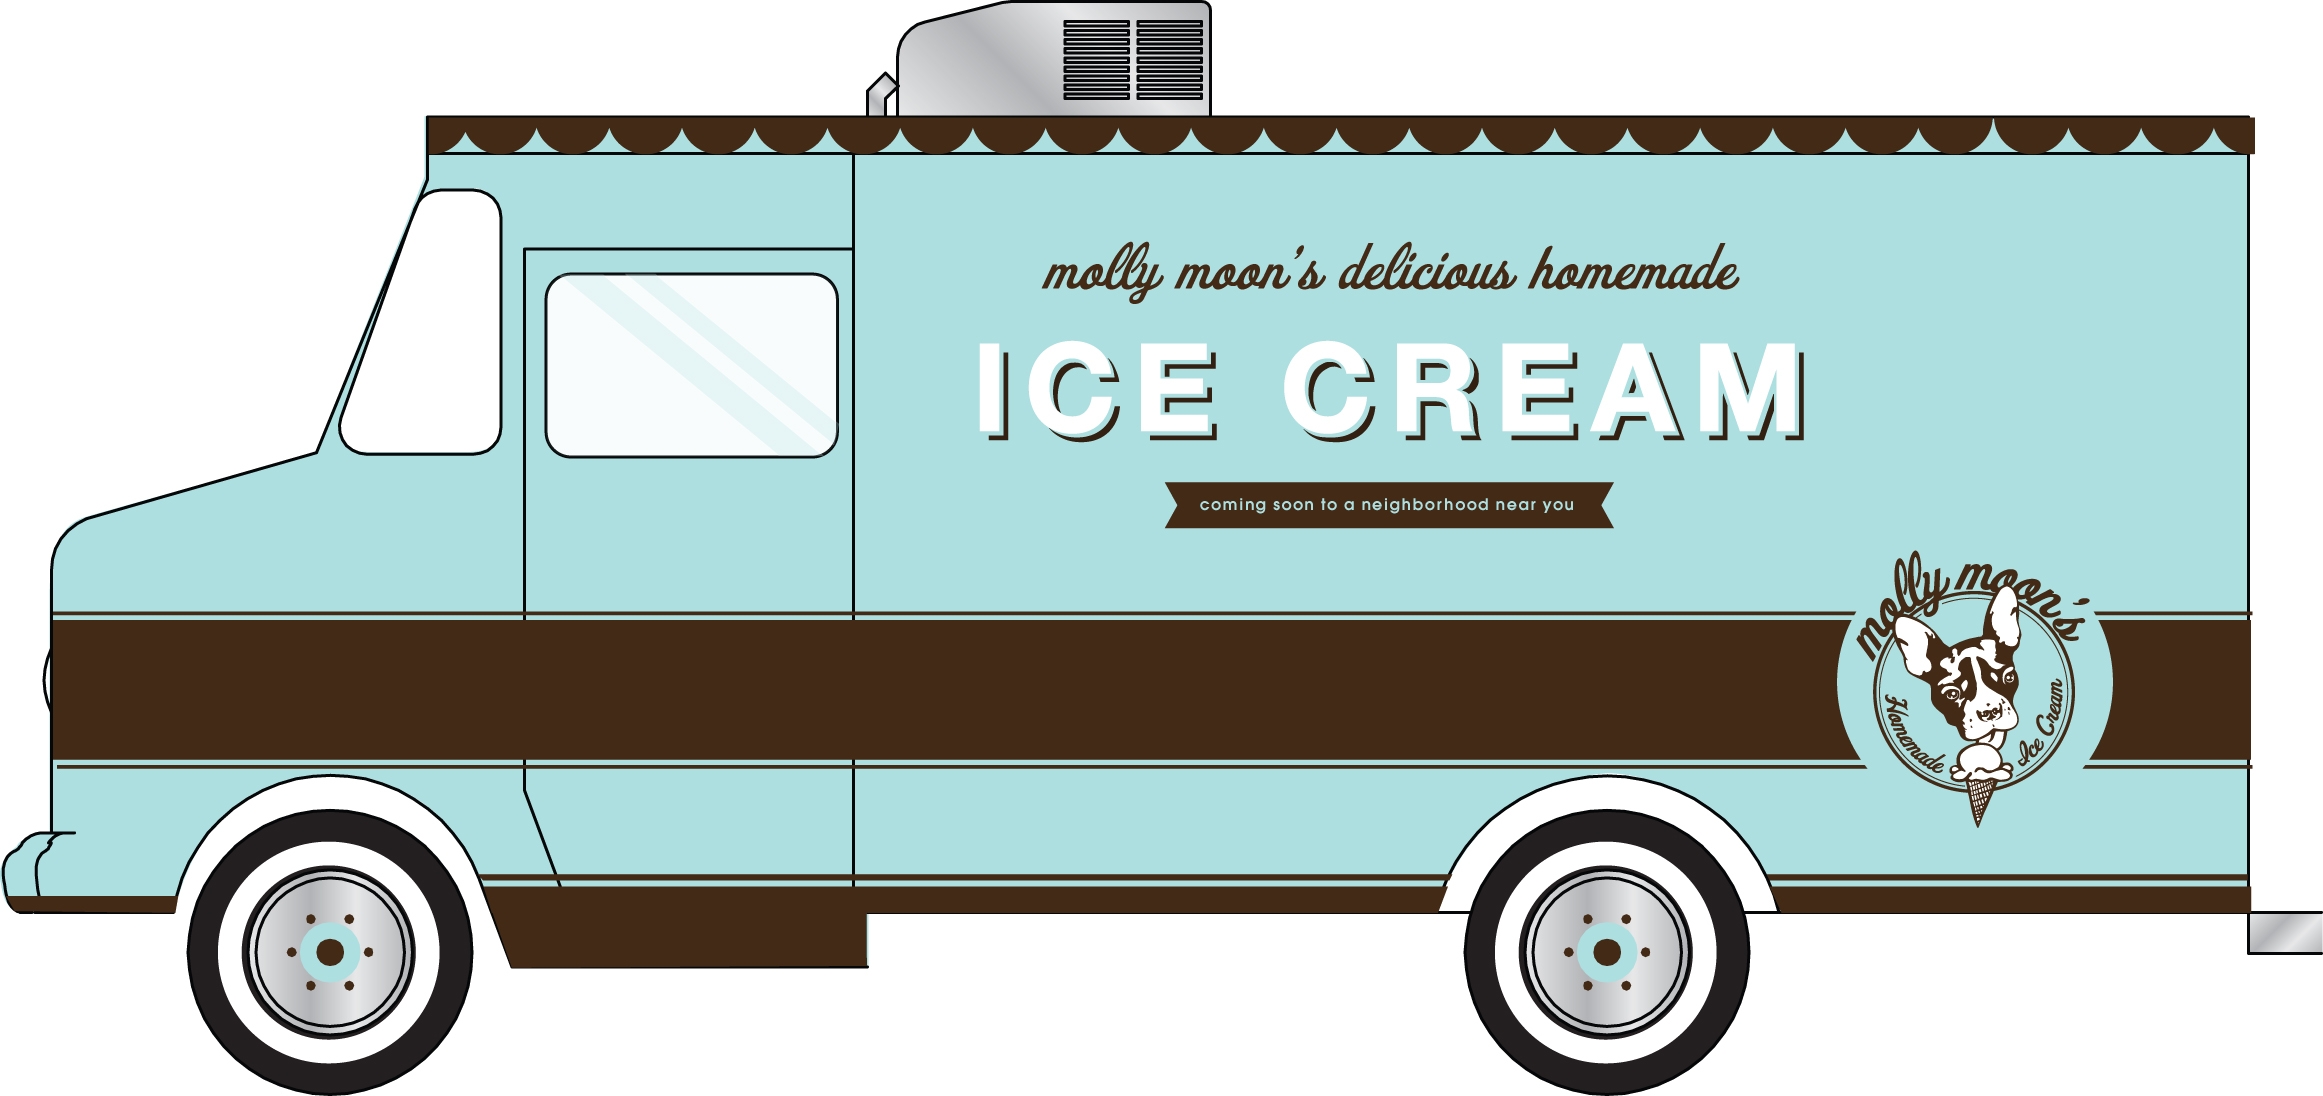 Molly Moon’s Ice Cream Truck at Coastal next week!